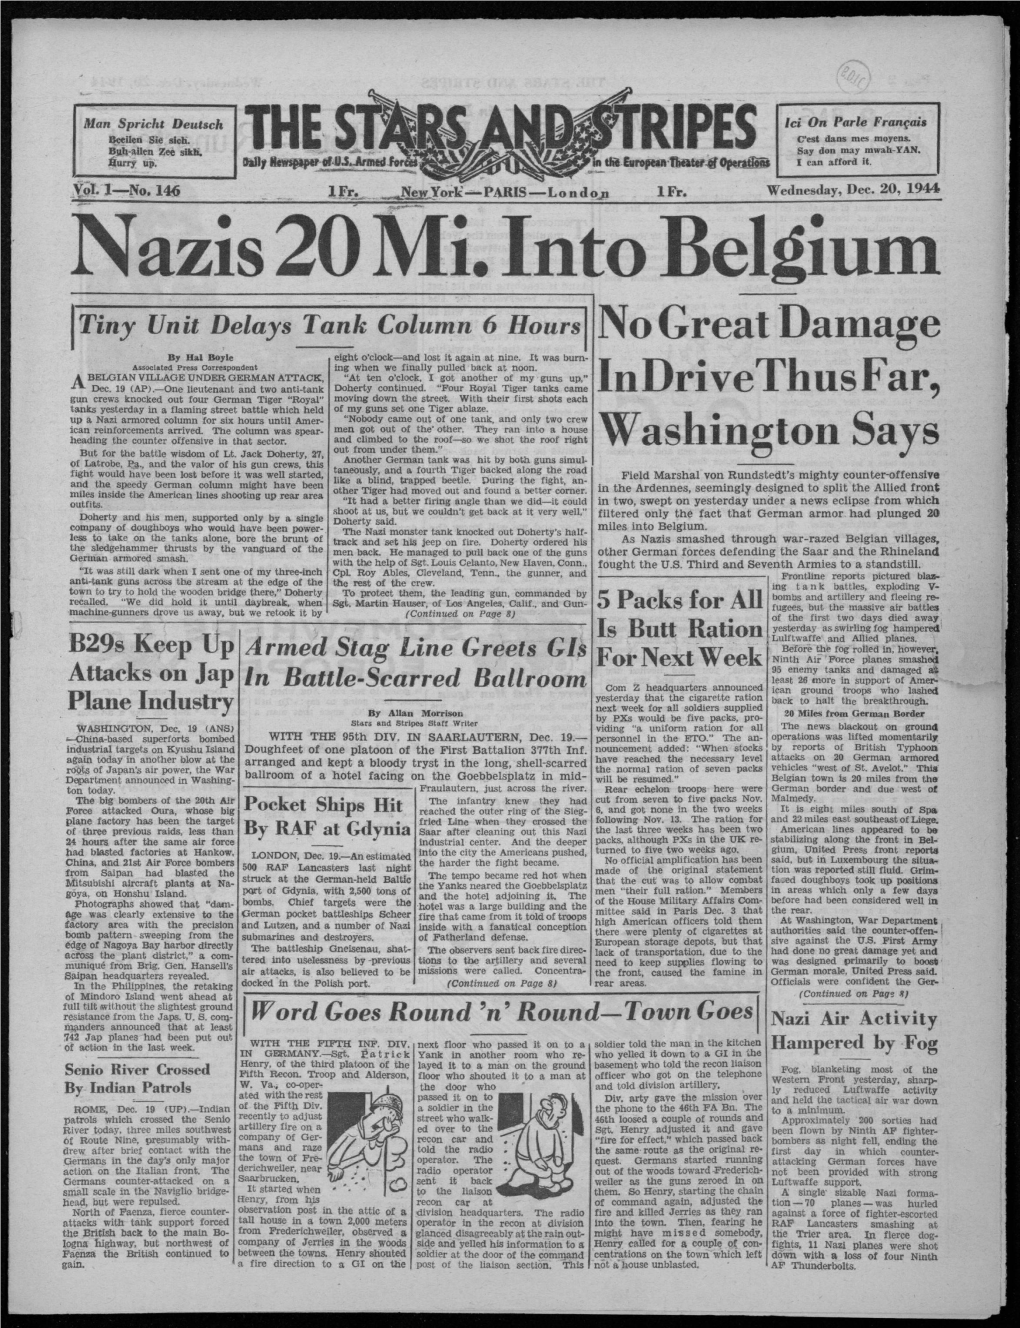 Nazis 20 Mi. Into Belgium